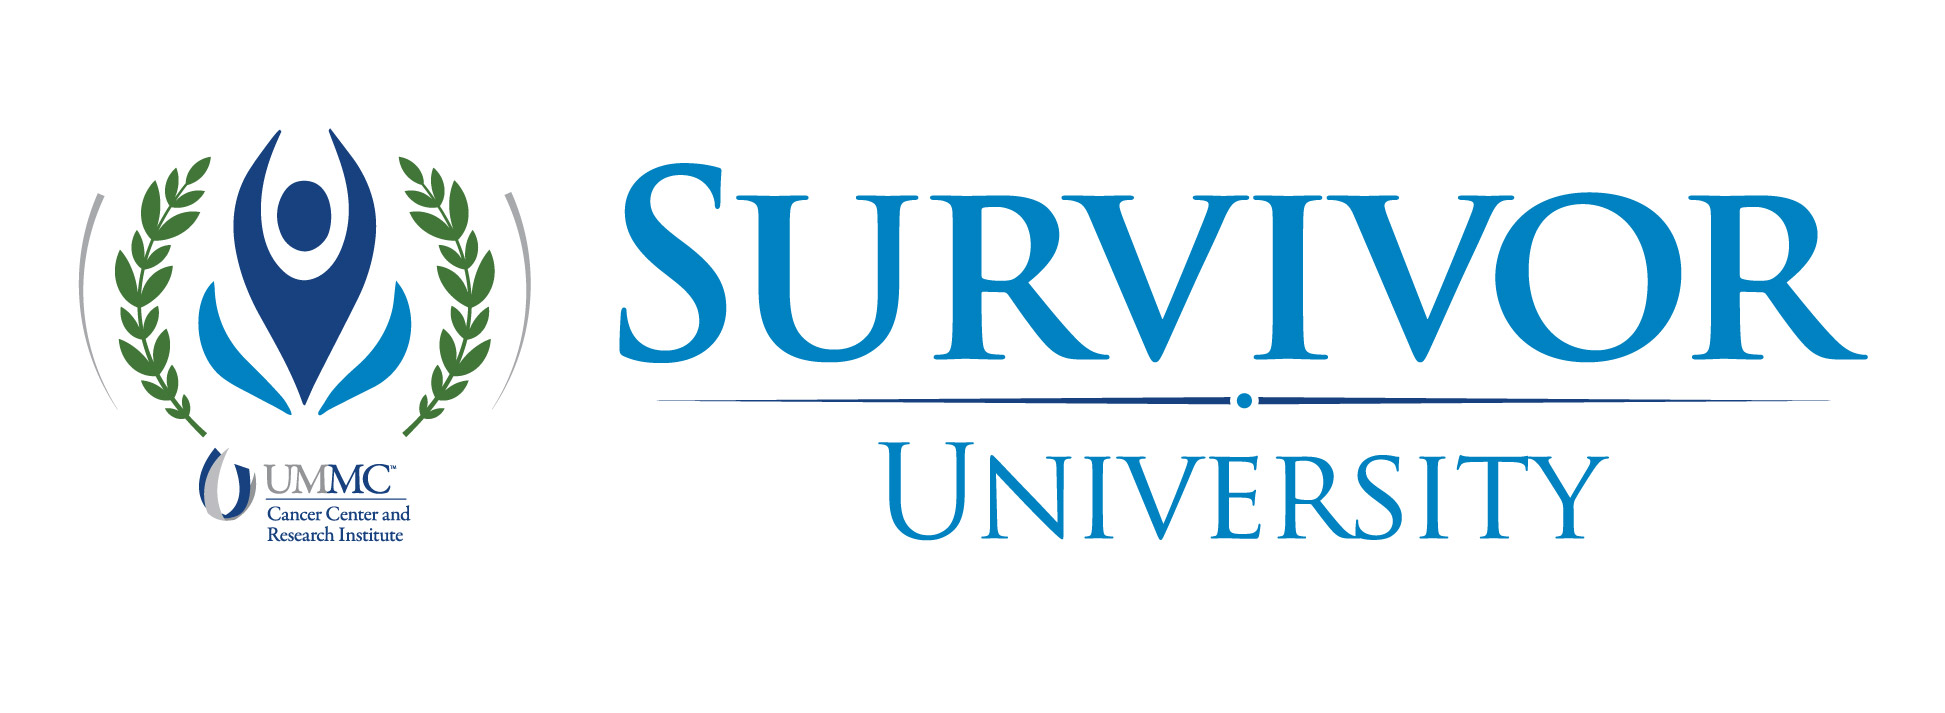 The logo for Survivor University